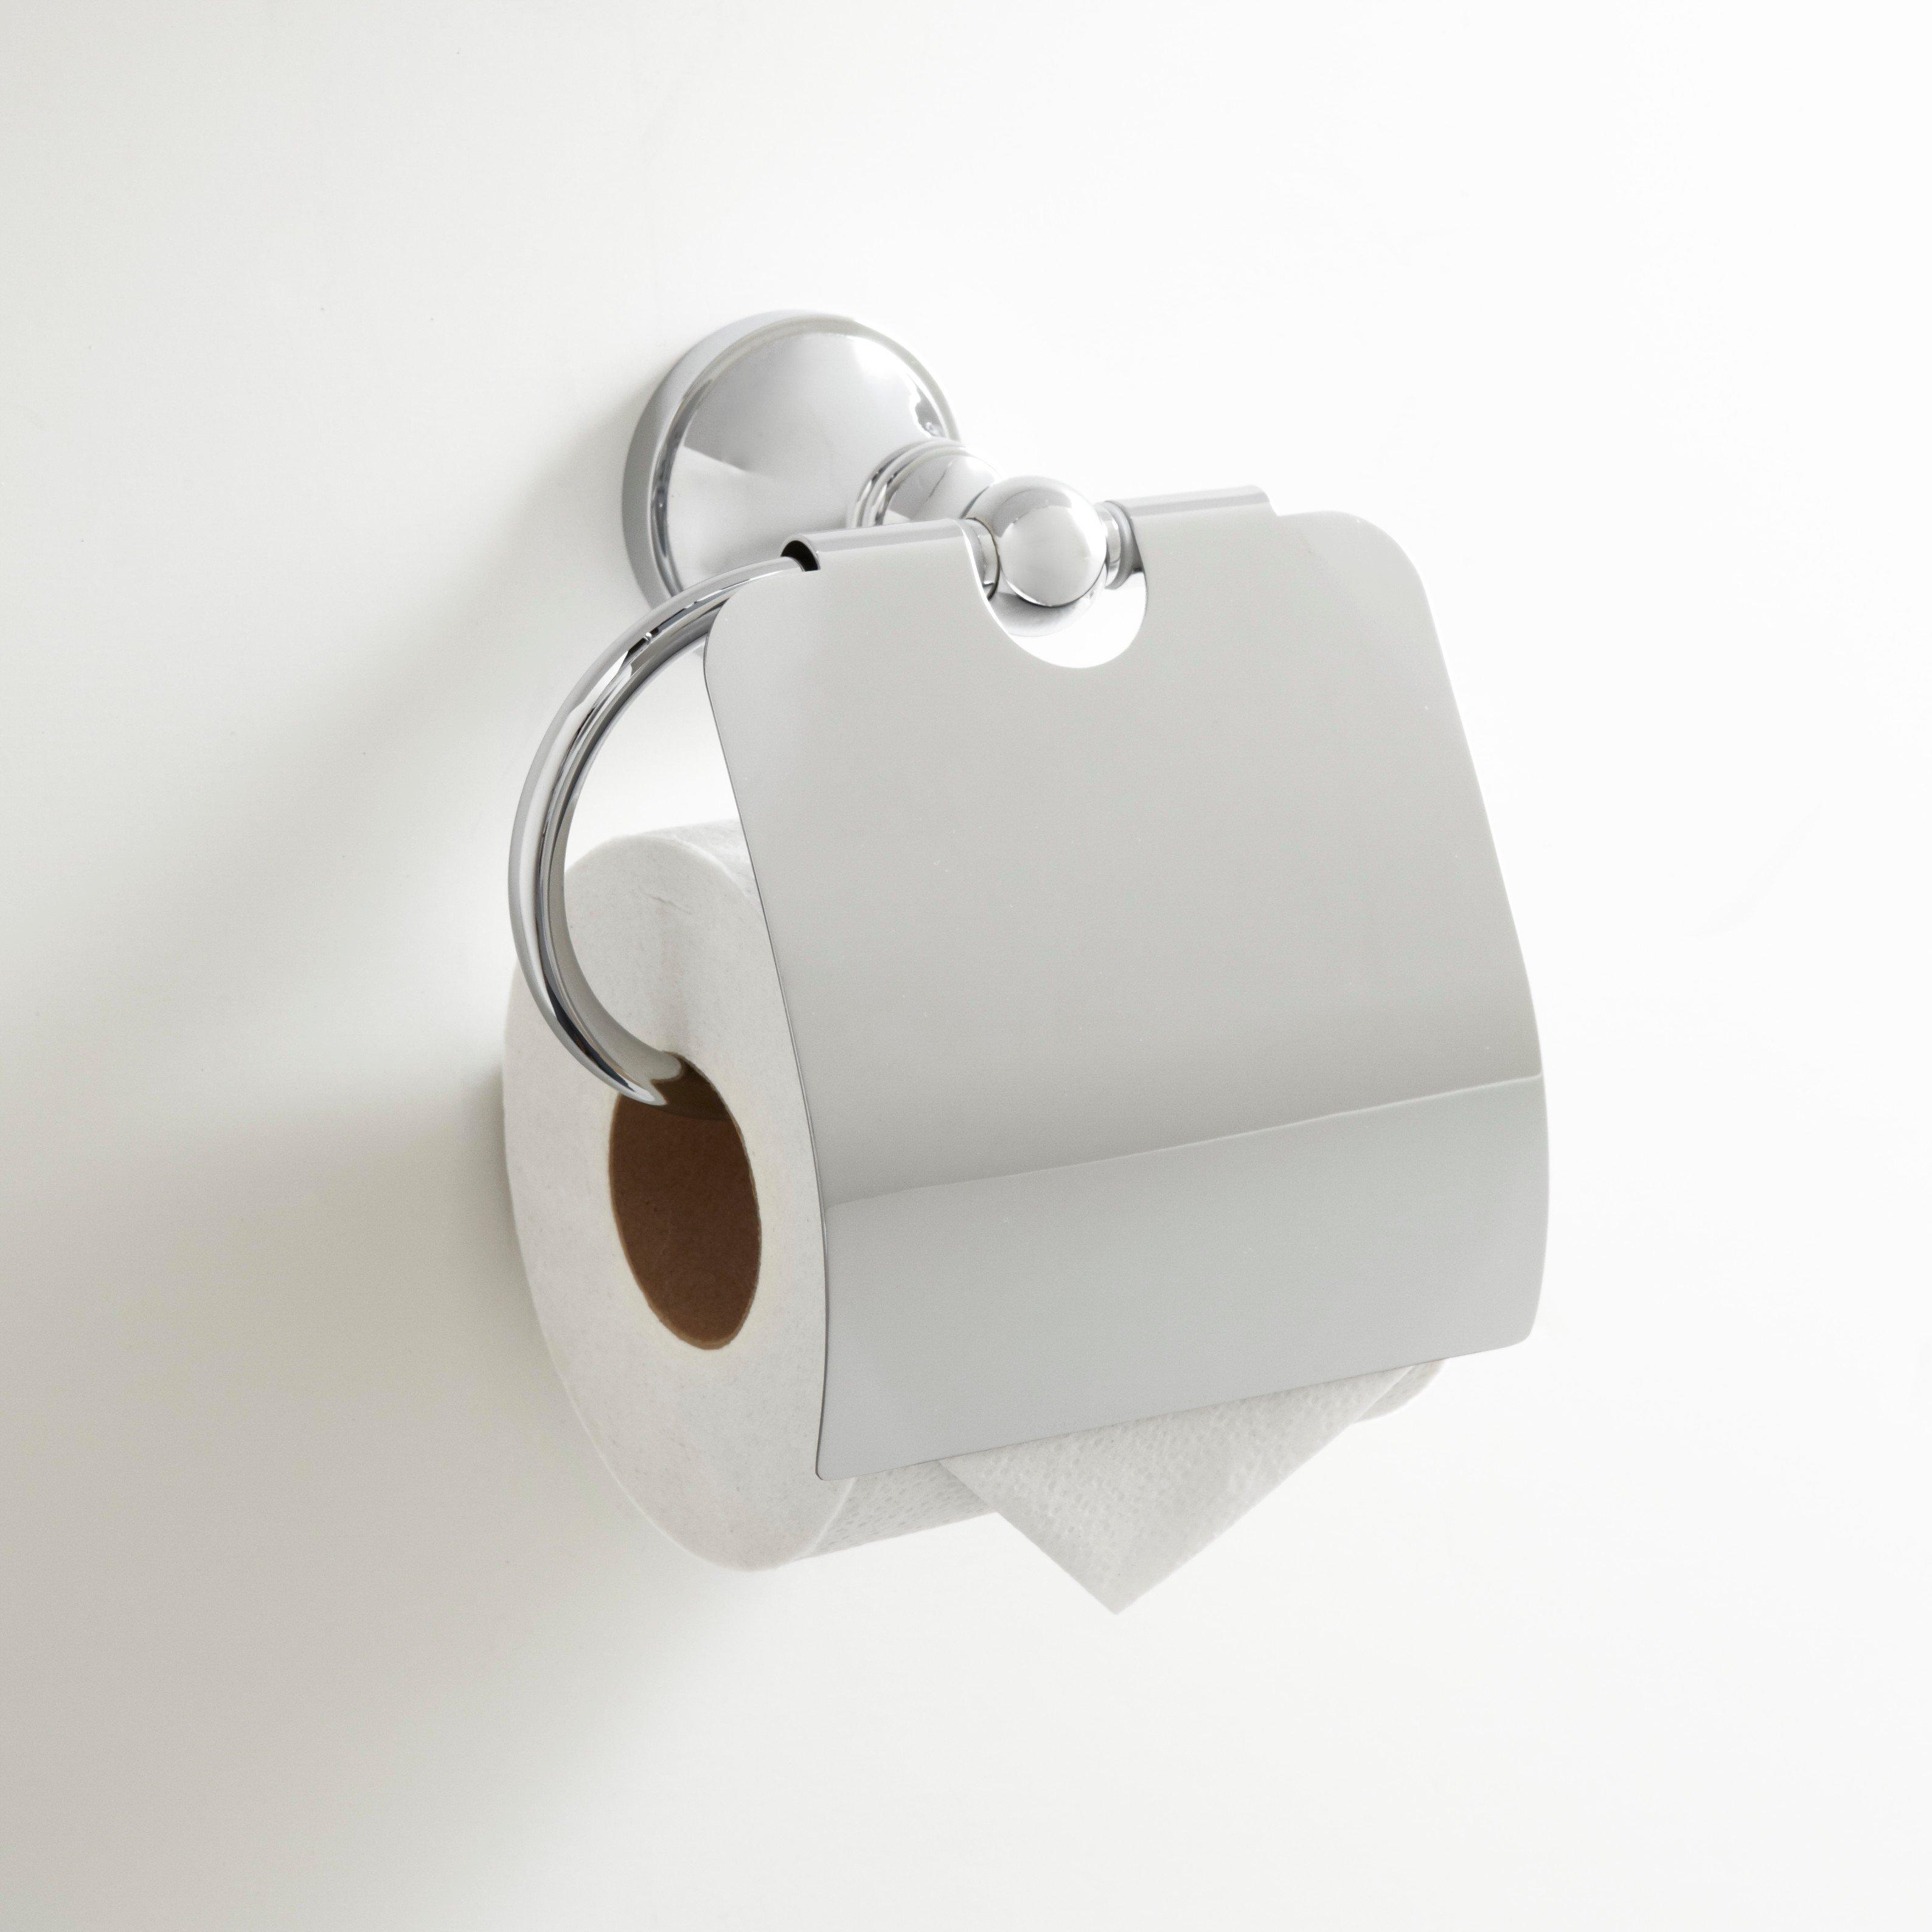 https://images.signaturehardware.com/i/signaturehdwr/353552-Seattle-toilet-paper-holder-CP-Beauty10.jpg